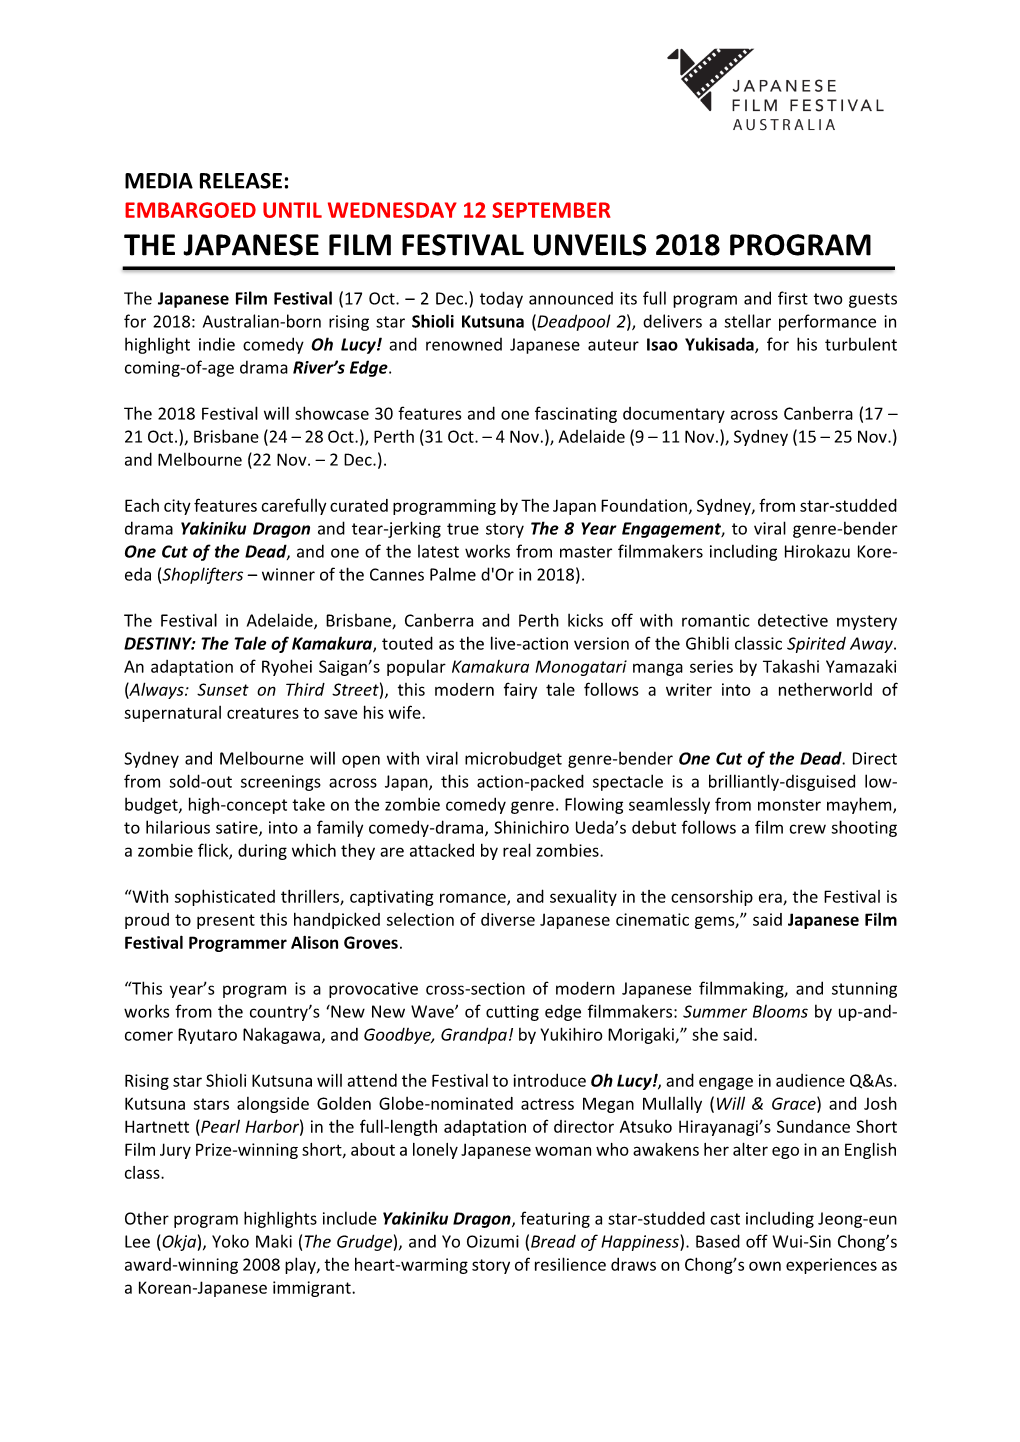 The Japanese Film Festival Unveils 2018 Program